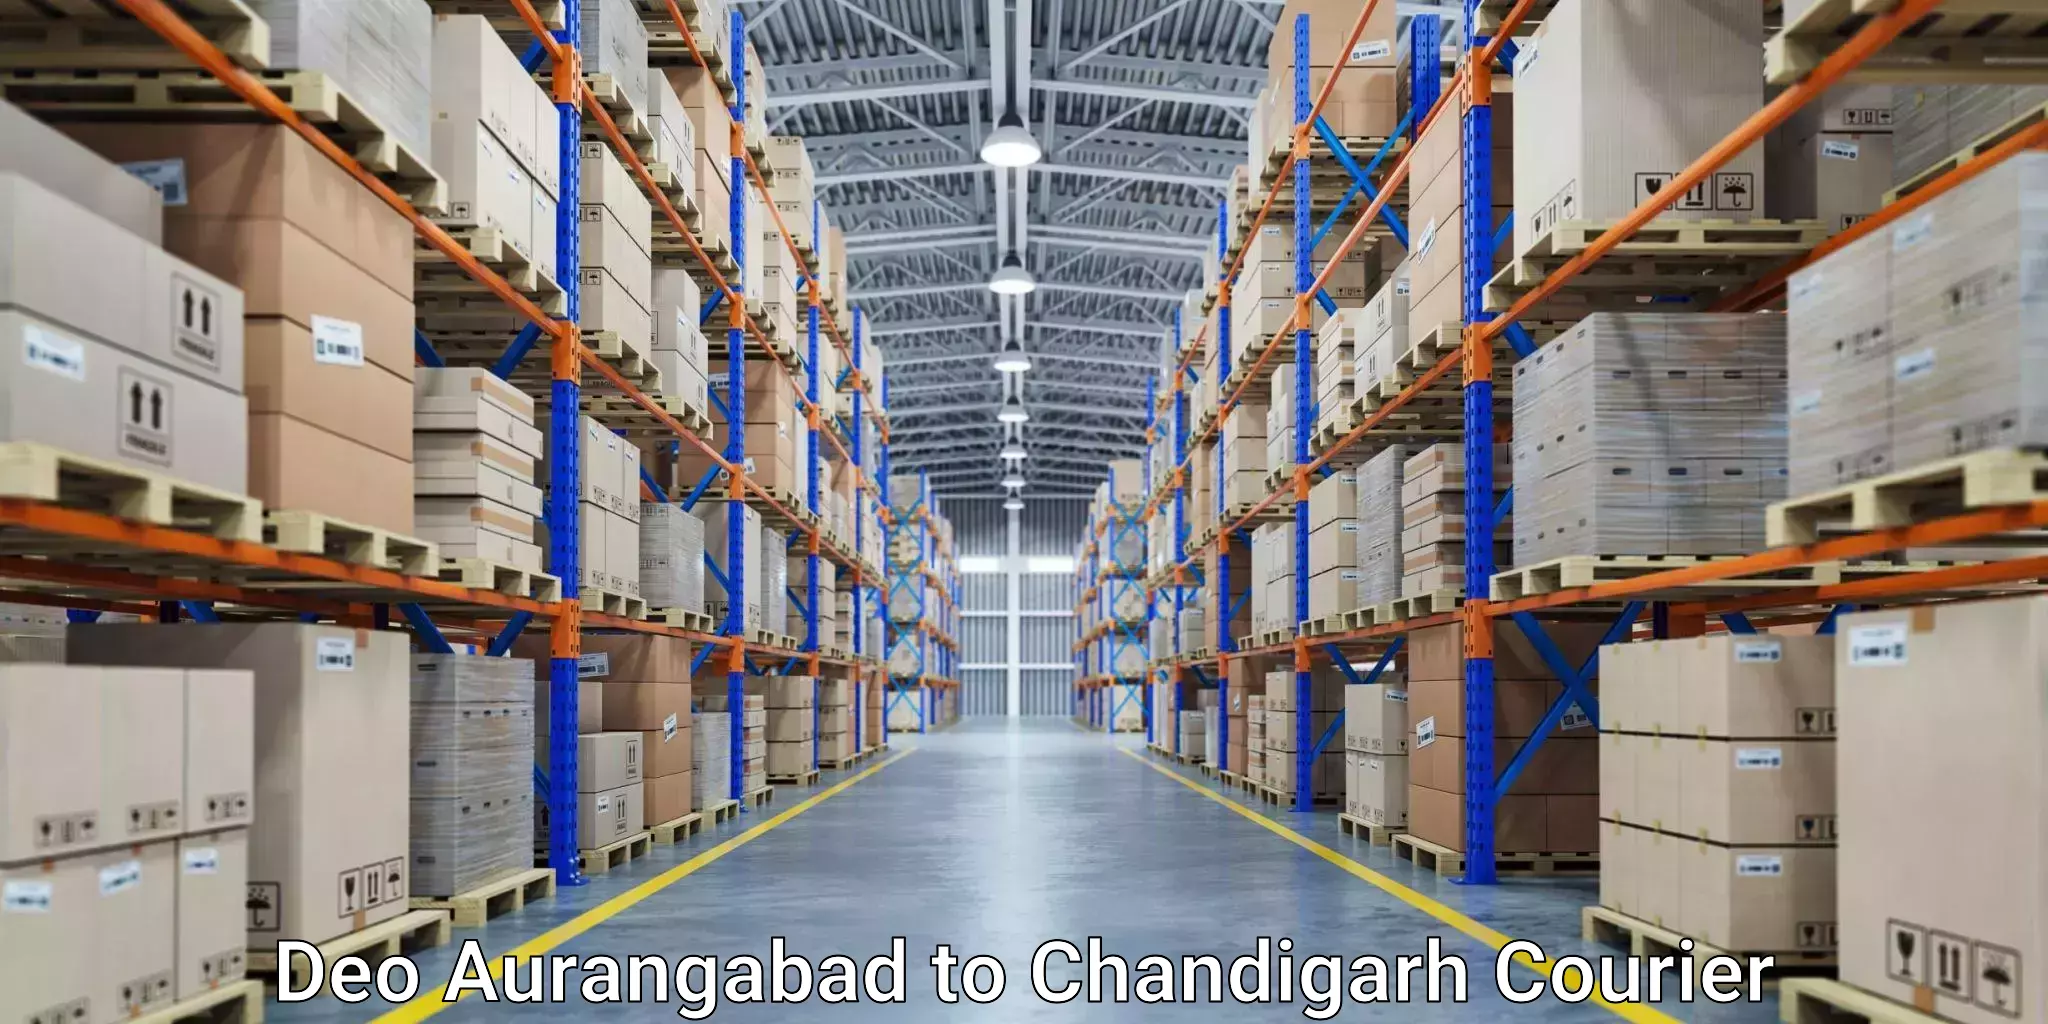 Modern courier technology Deo Aurangabad to Chandigarh